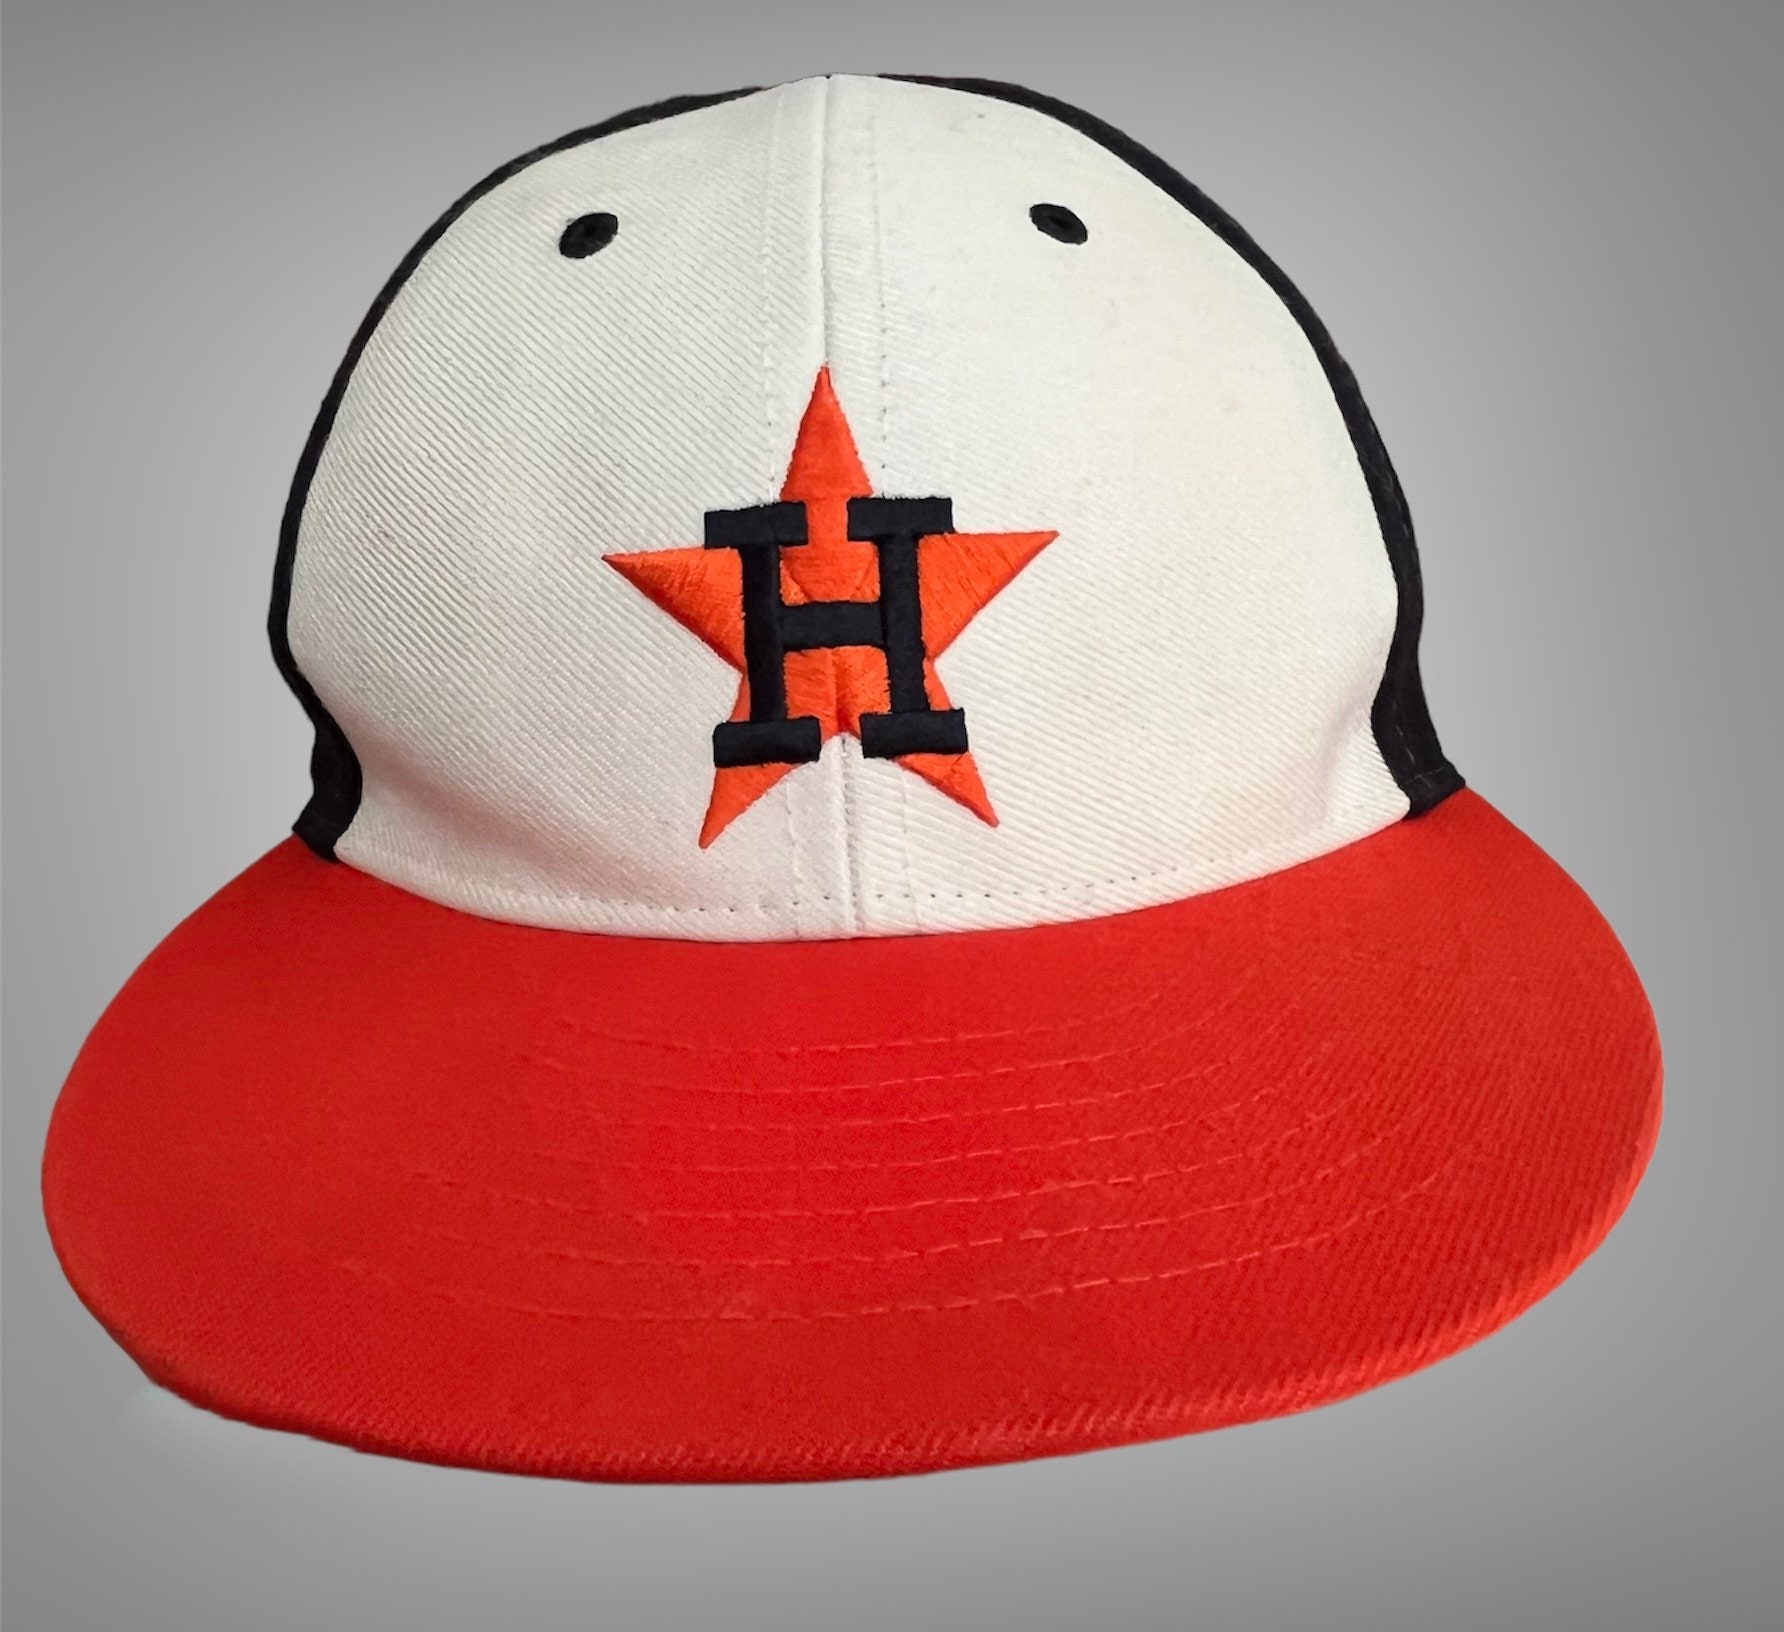 Camiseta de beisbol MLB Houston Astros Nike Official Cooperstown Edition  Blanco para Hombre